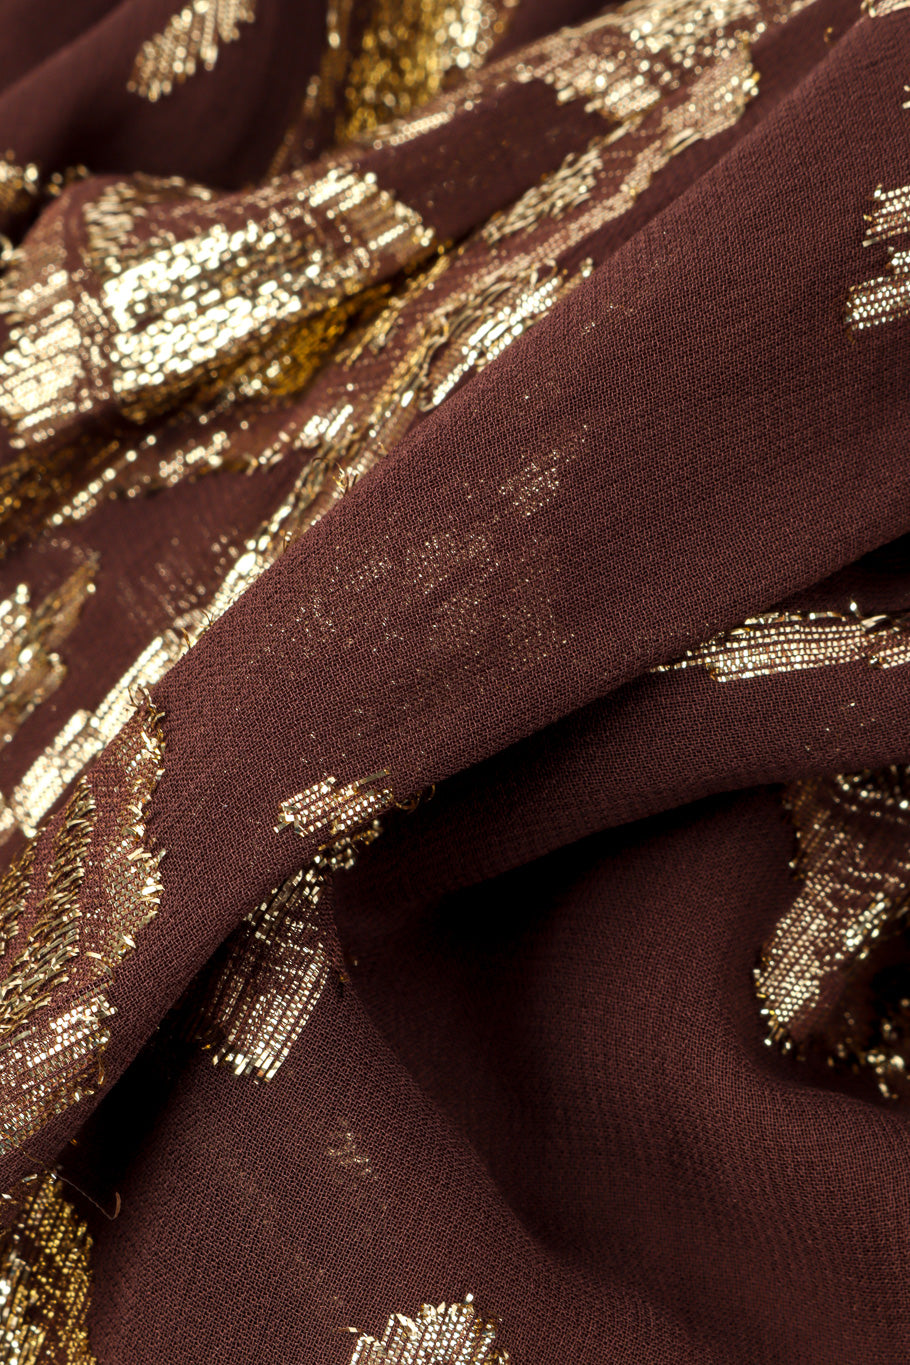 Vintage Adolfo Metallic Top and Skirt Set fabric closeup @recessla